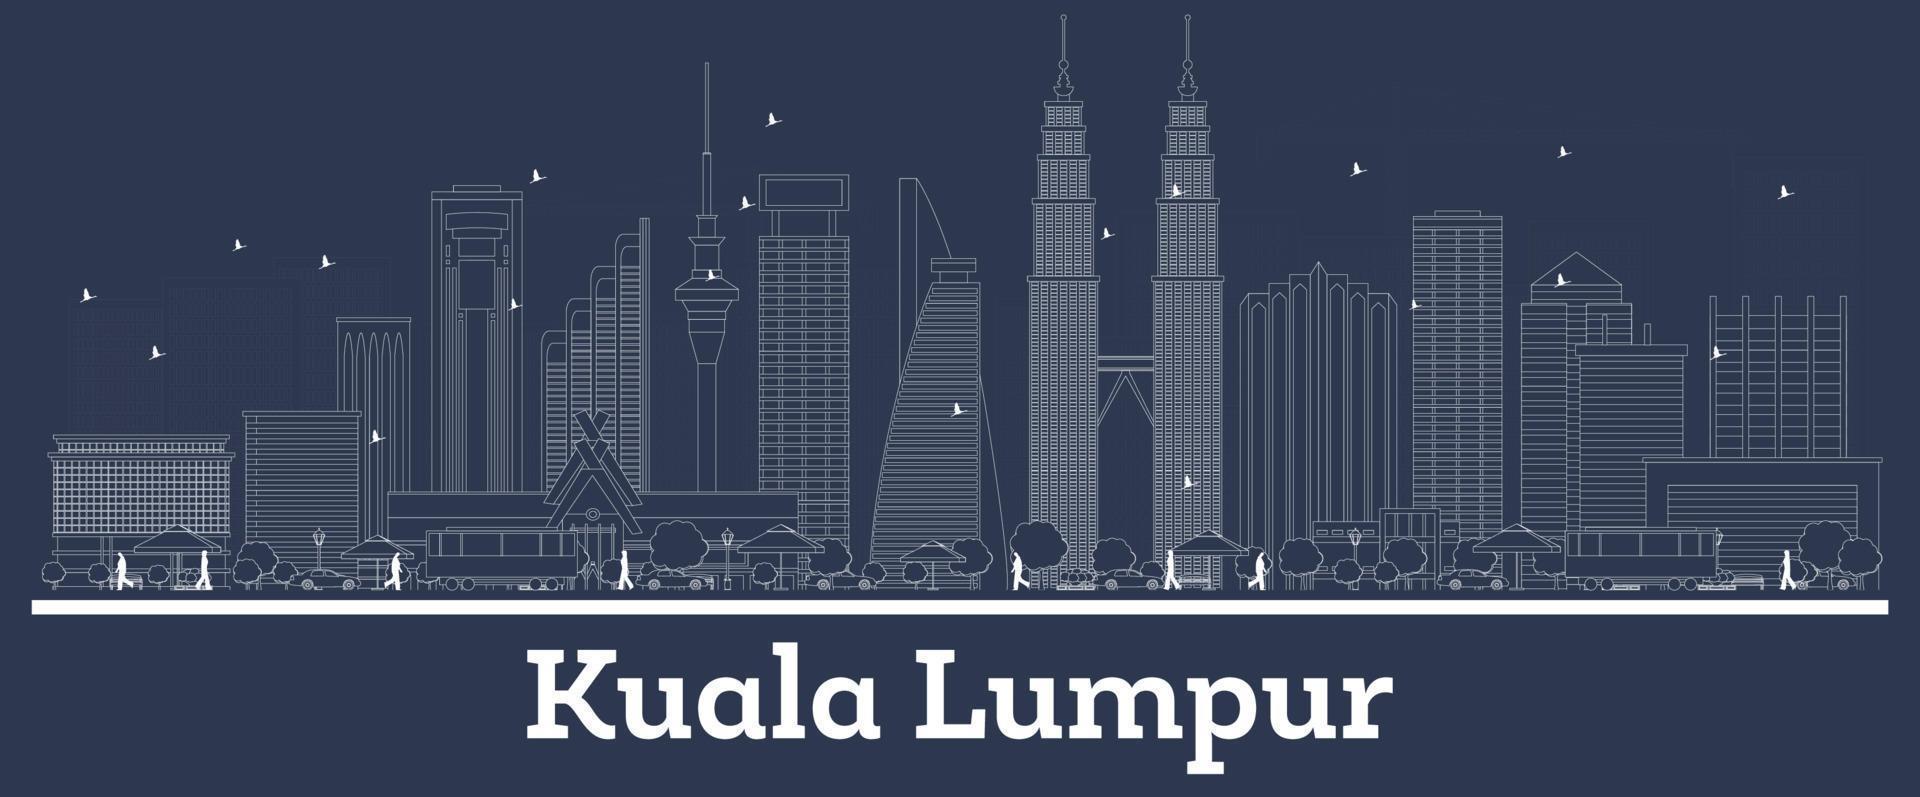 schets Kuala lumpur Maleisië stad horizon met wit gebouwen. vector